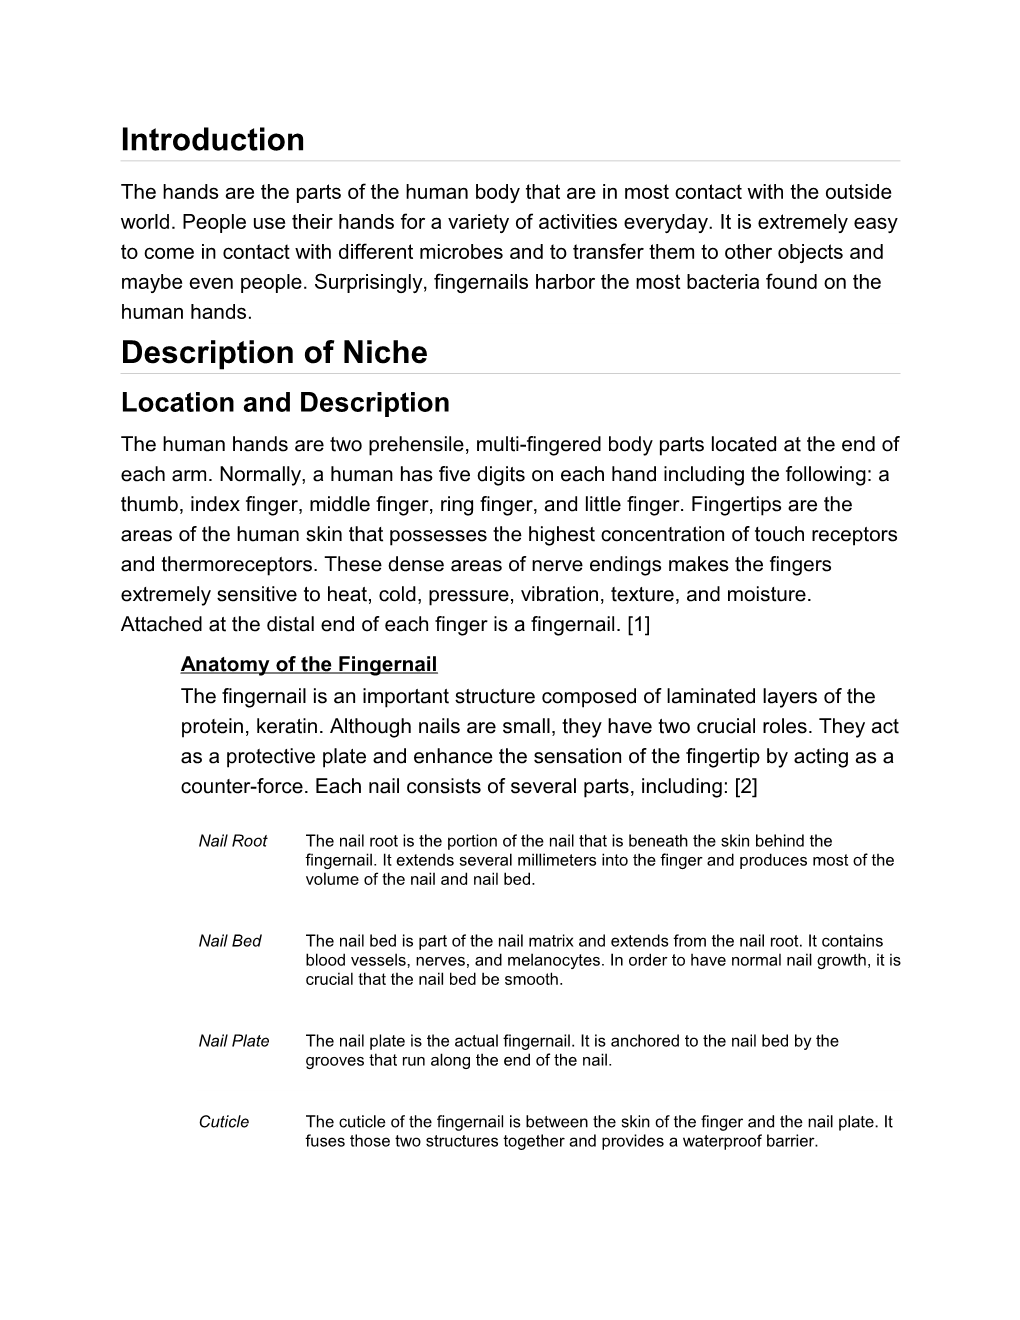 Description of Niche